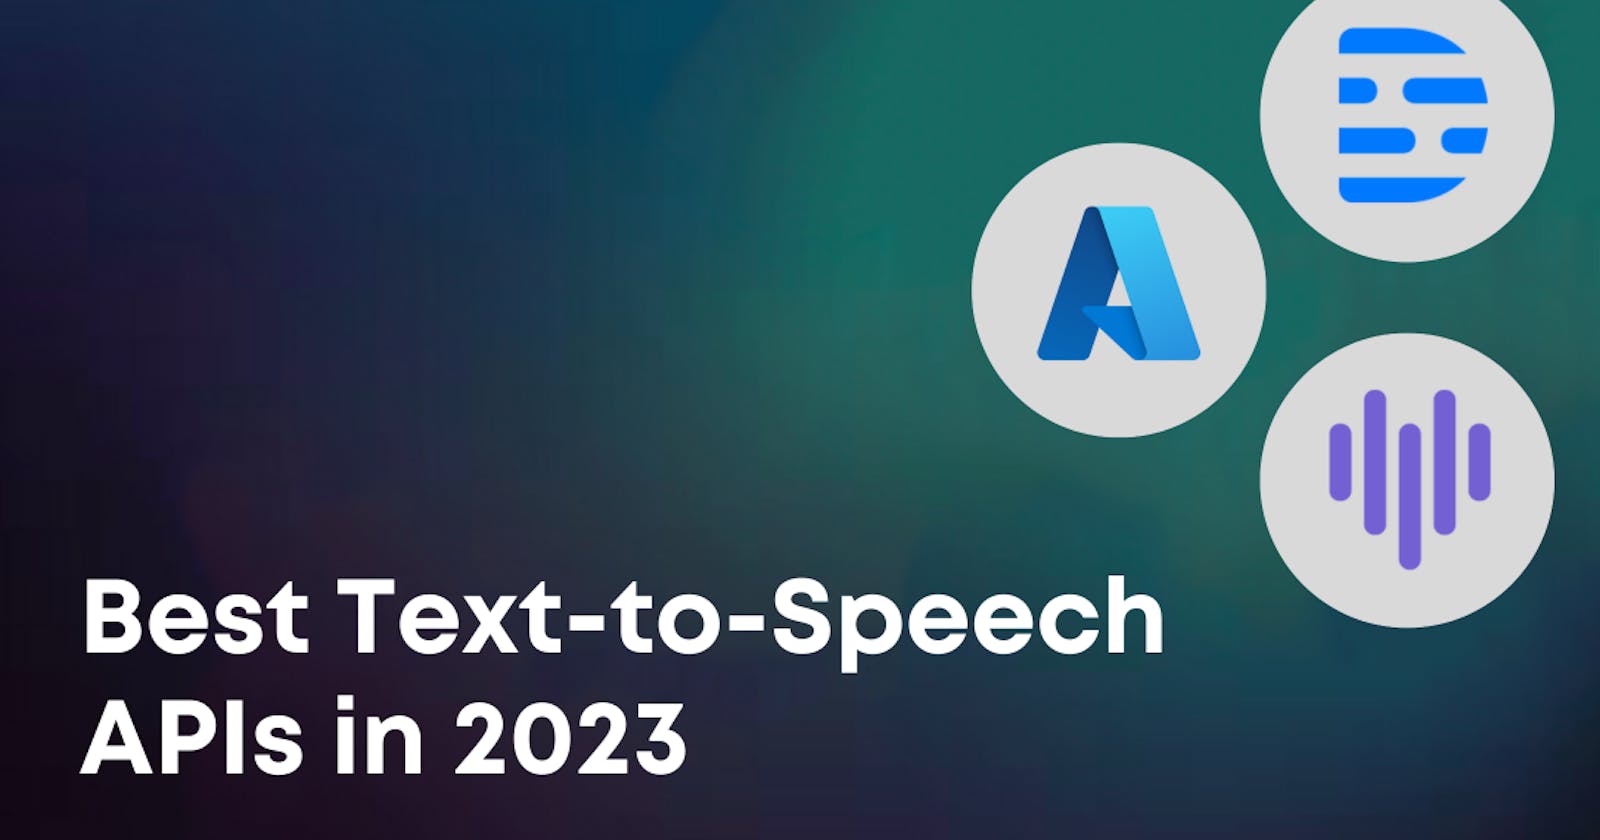 Best Text-to-Speech APIs in 2023